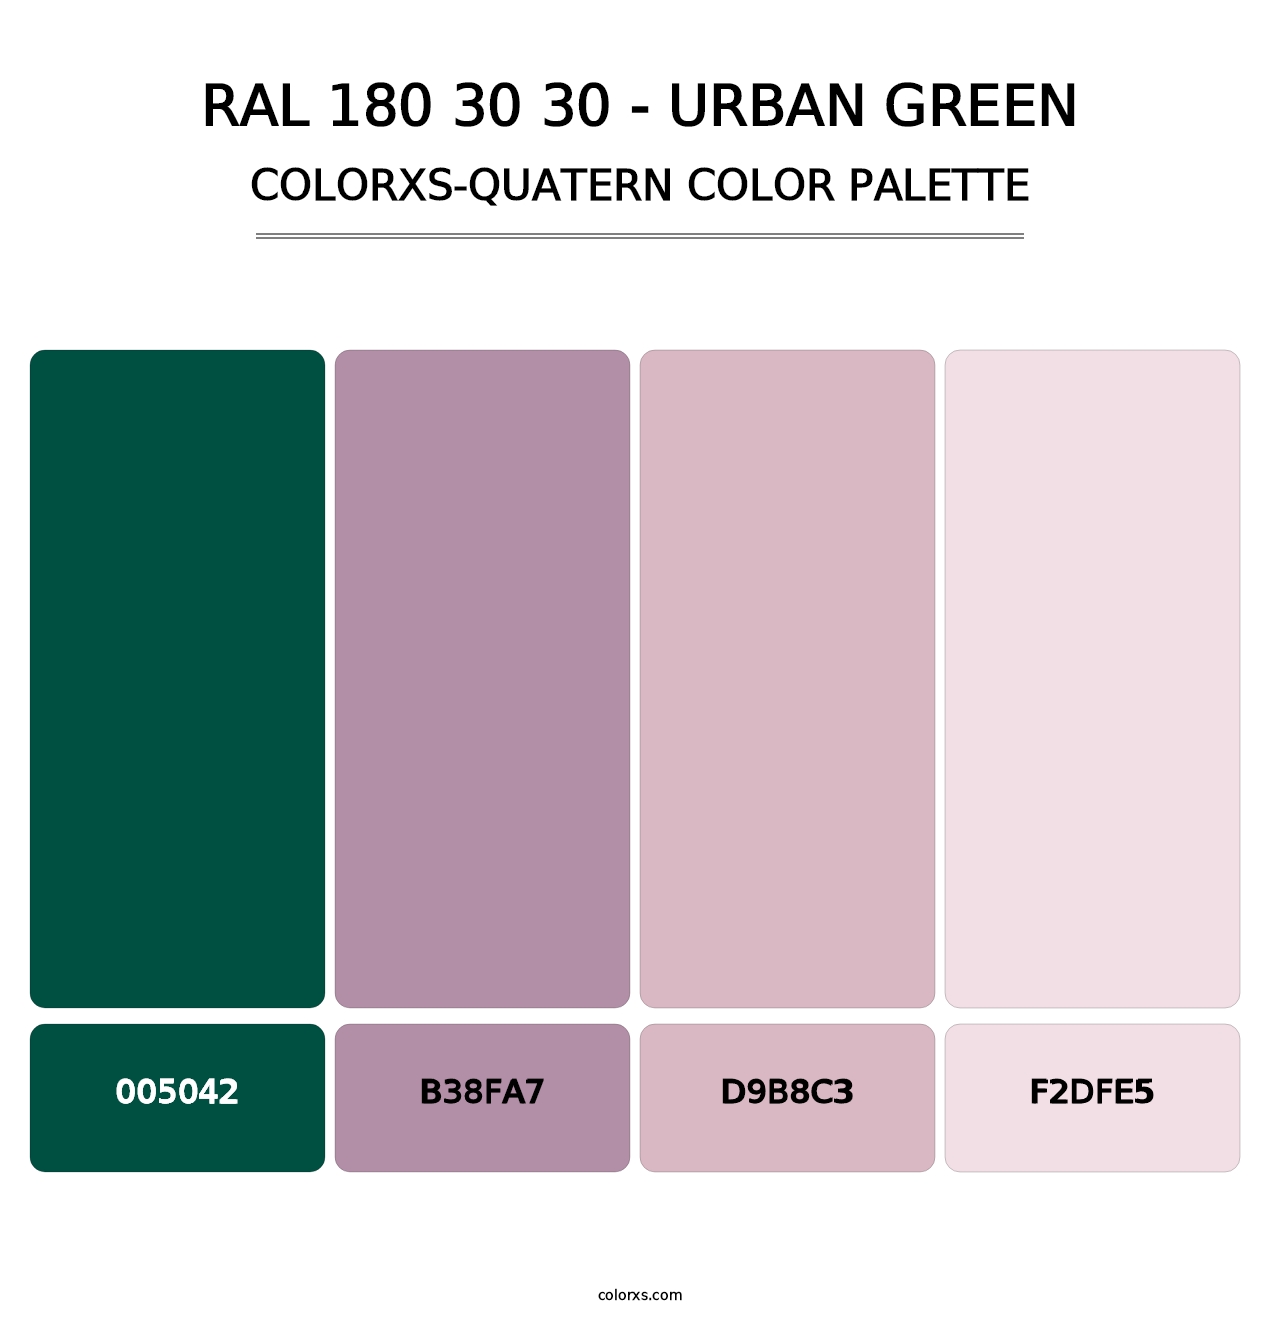 RAL 180 30 30 - Urban Green - Colorxs Quatern Palette